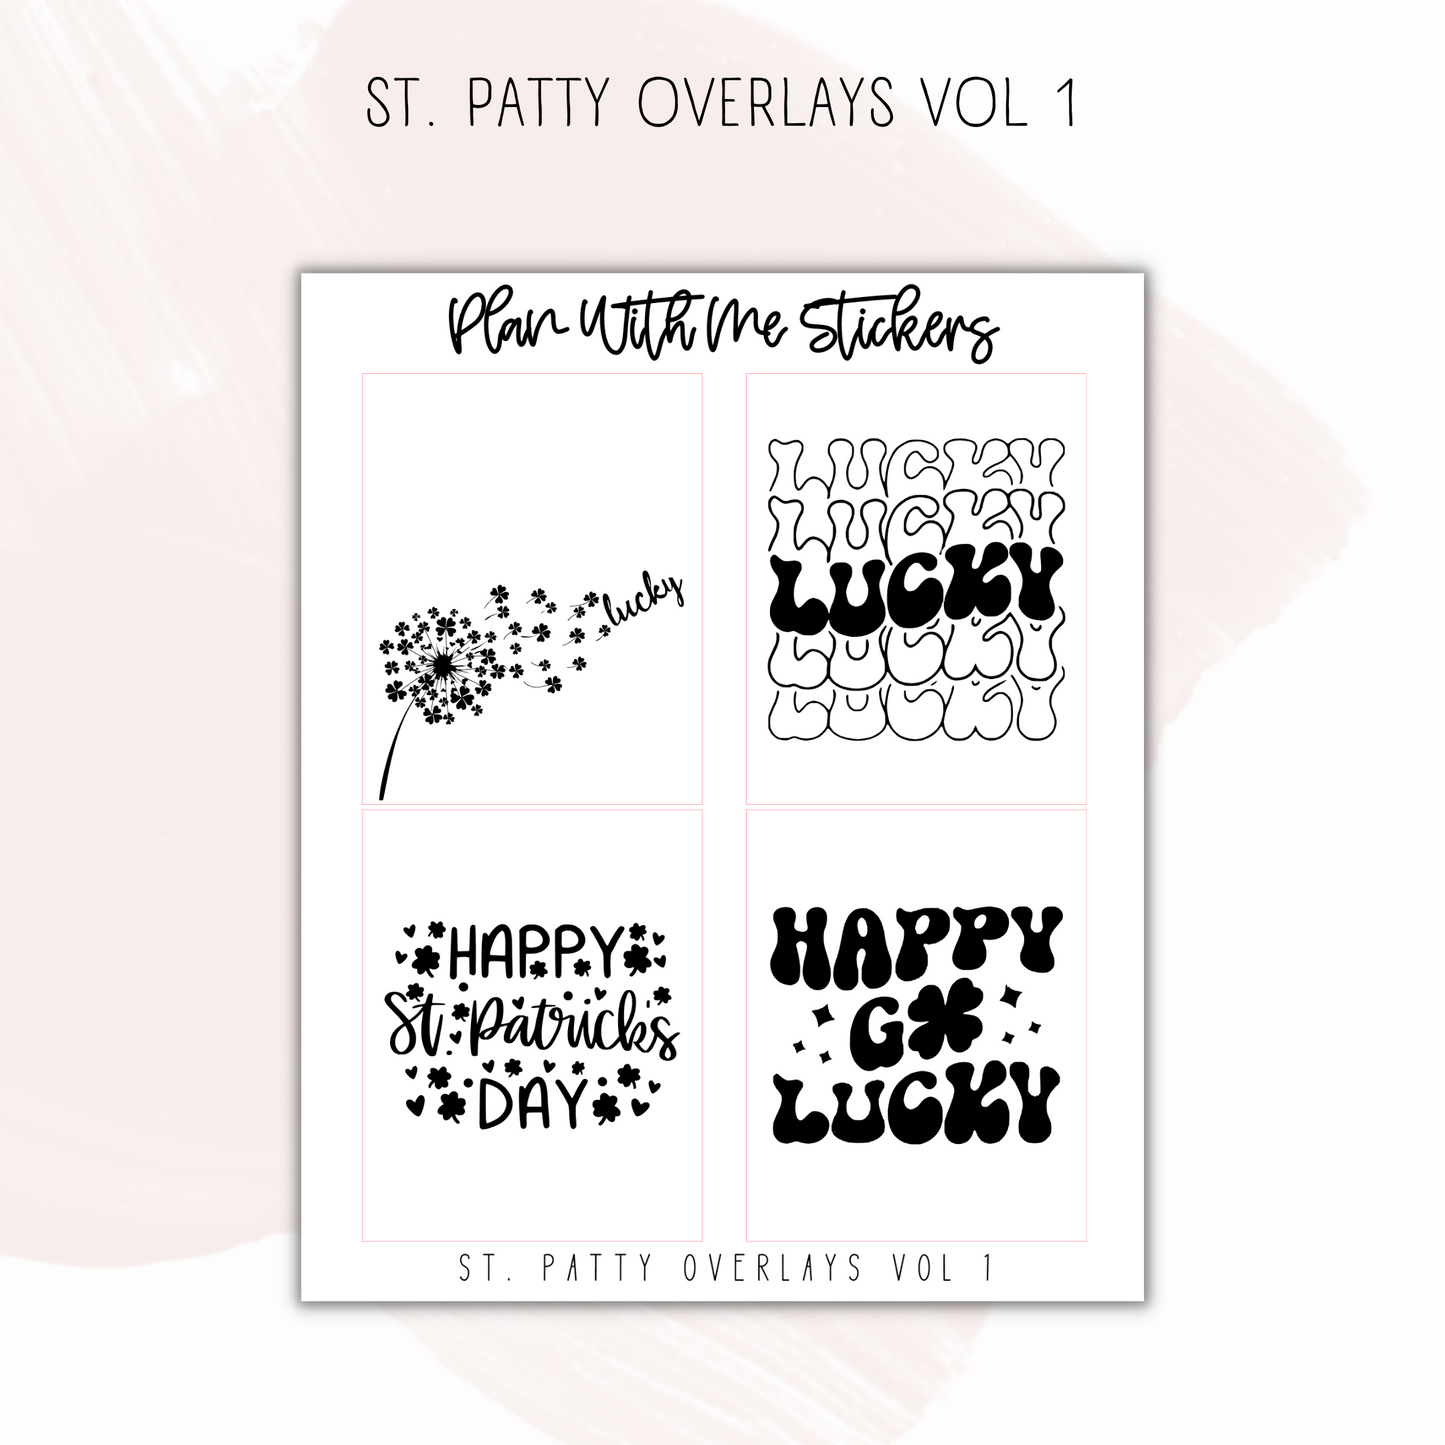 St. Patty Day Overlays Vol 1